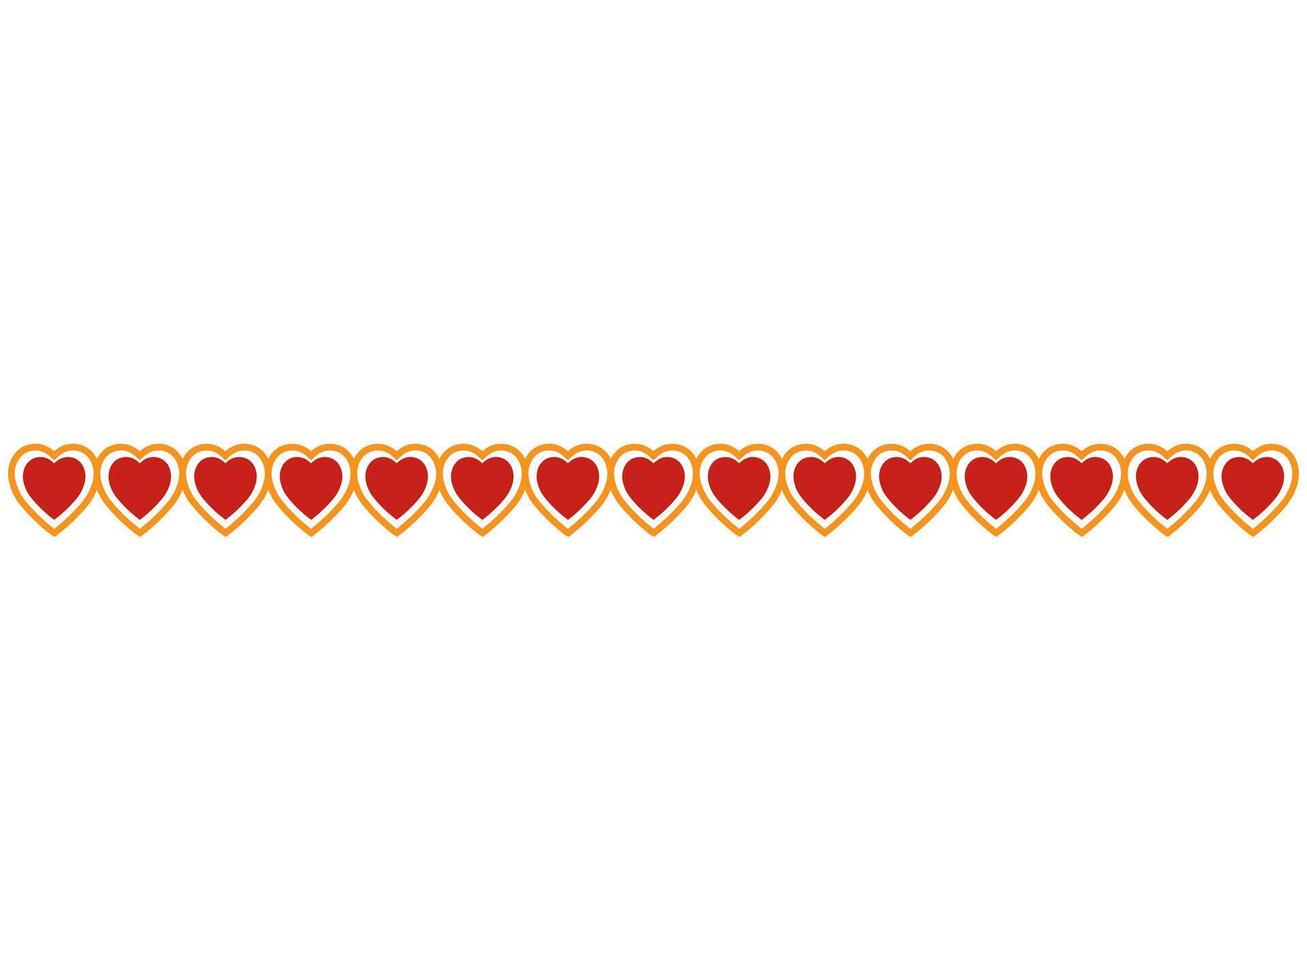 Heart Valentines Day Background Illustration vector